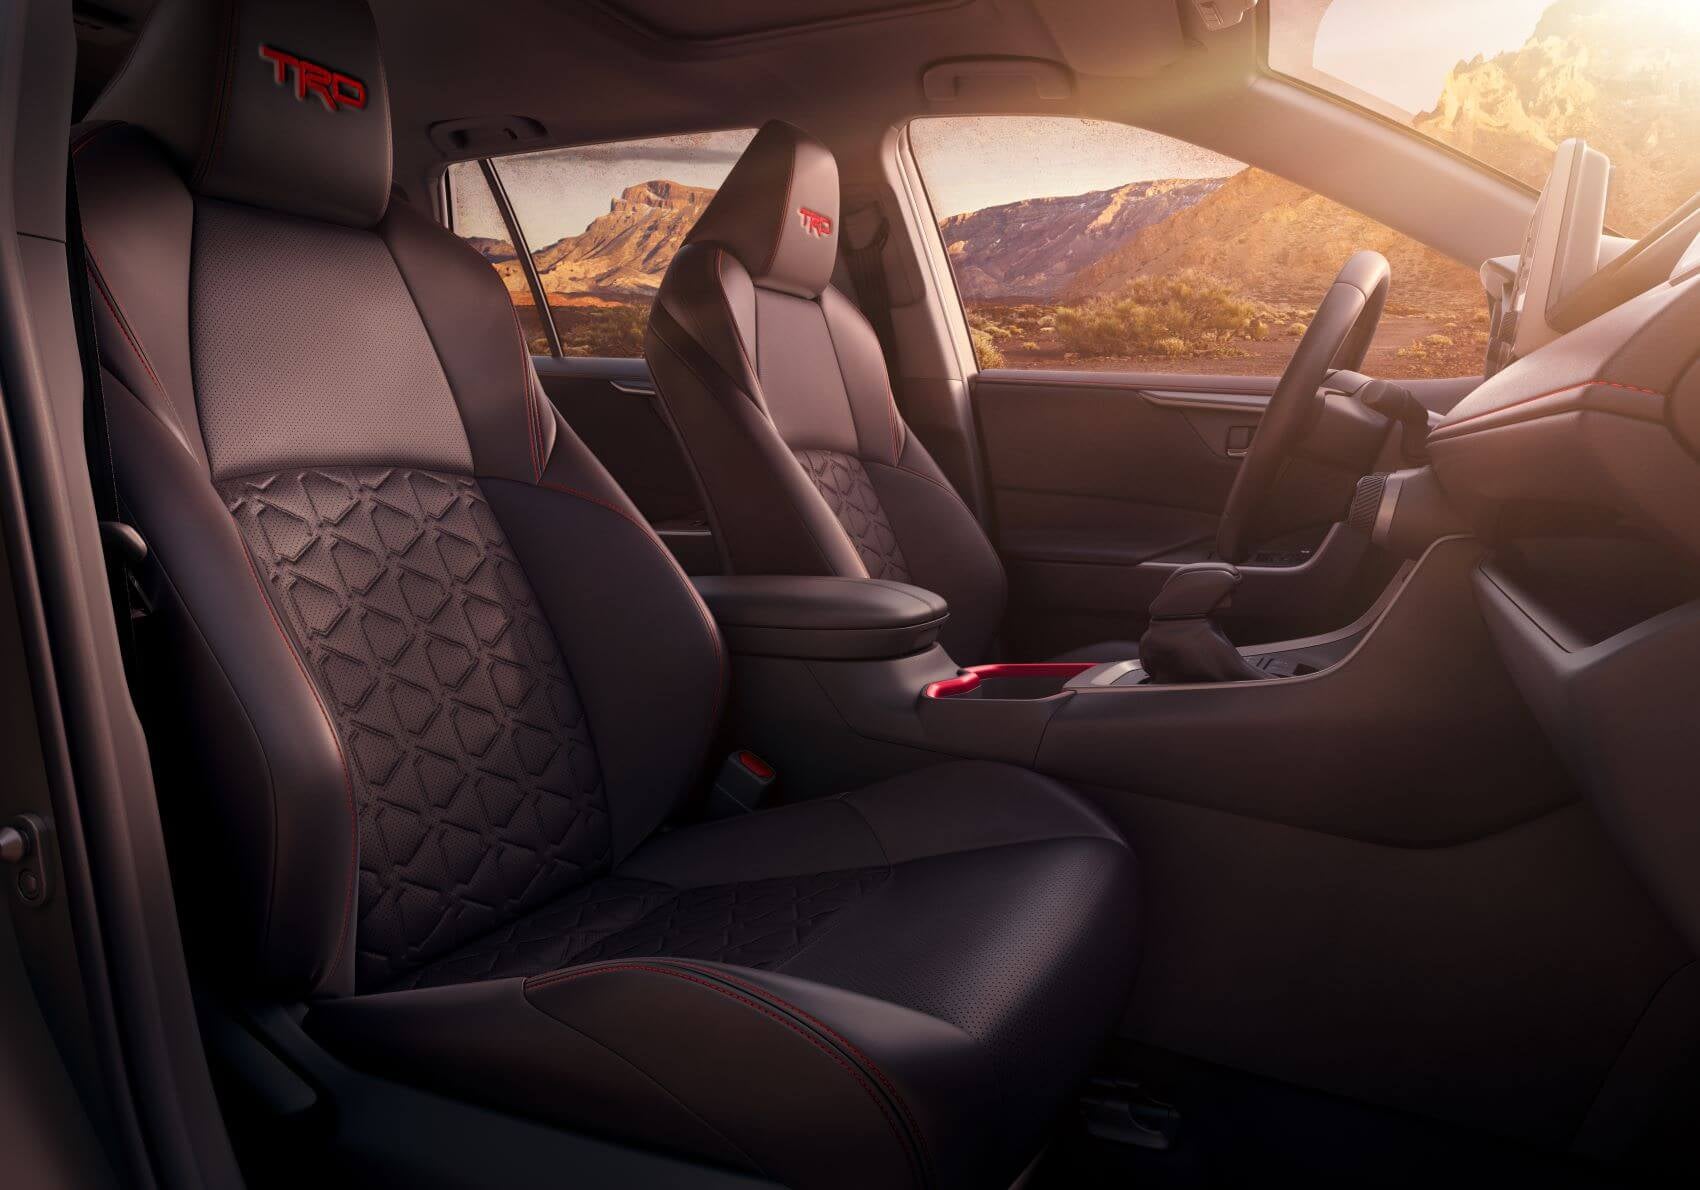 Toyota RAV4 Interior Seating